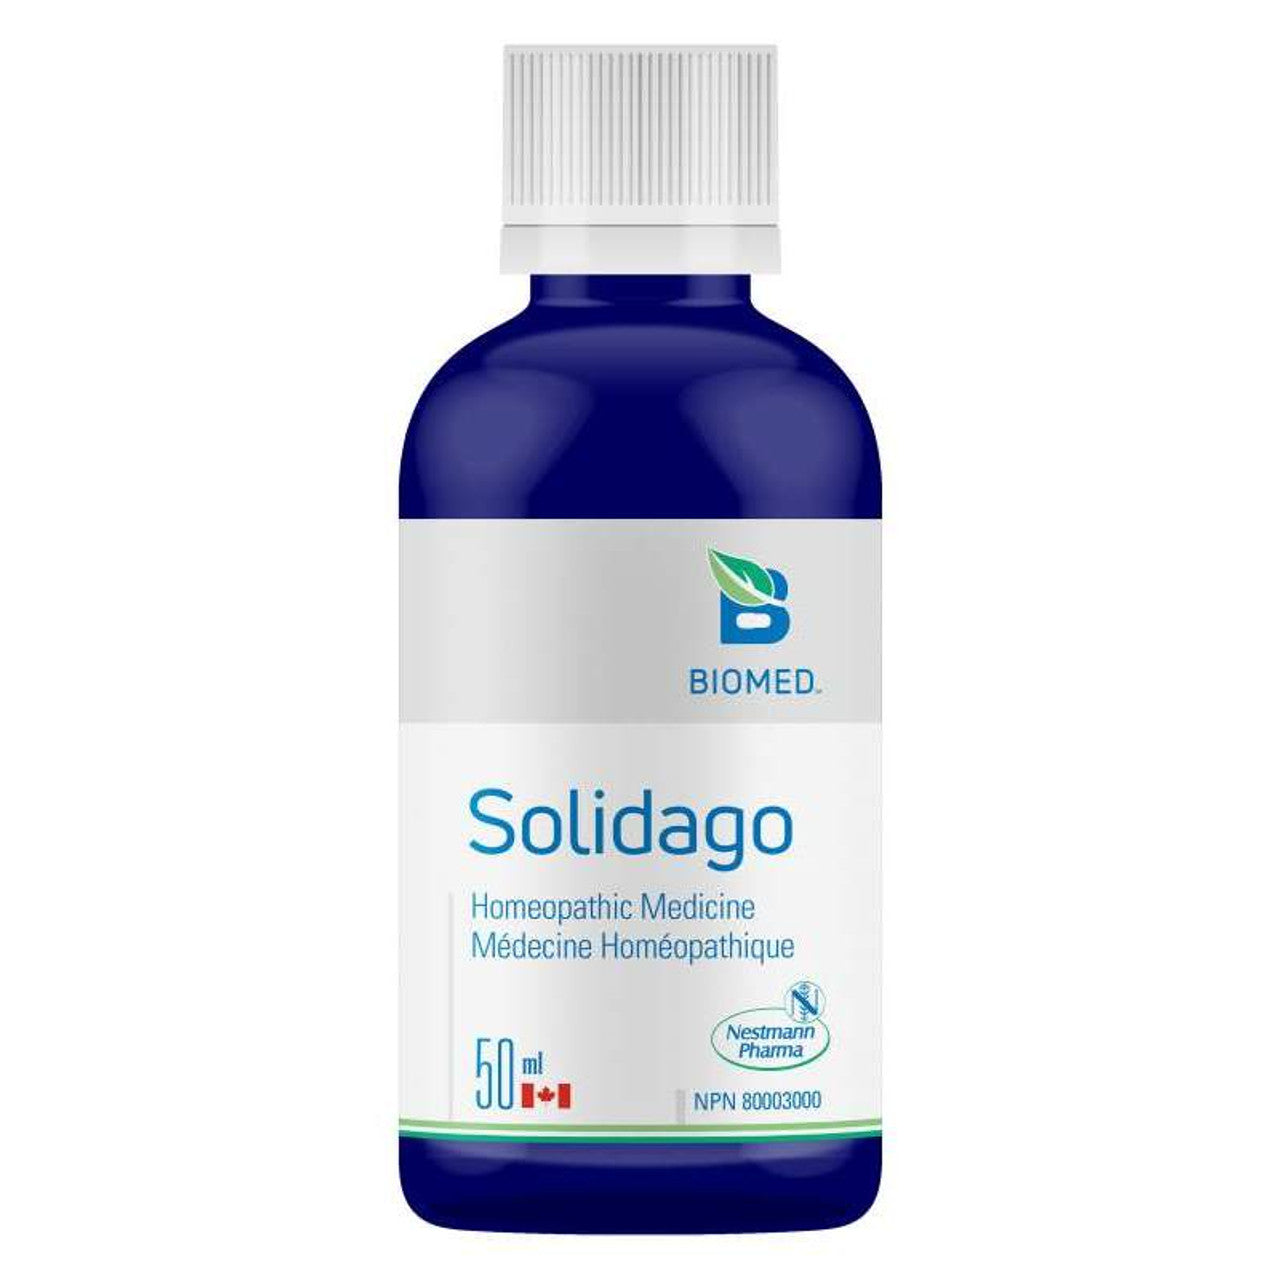 Solidago, Biomed solidago, solidago 50ml